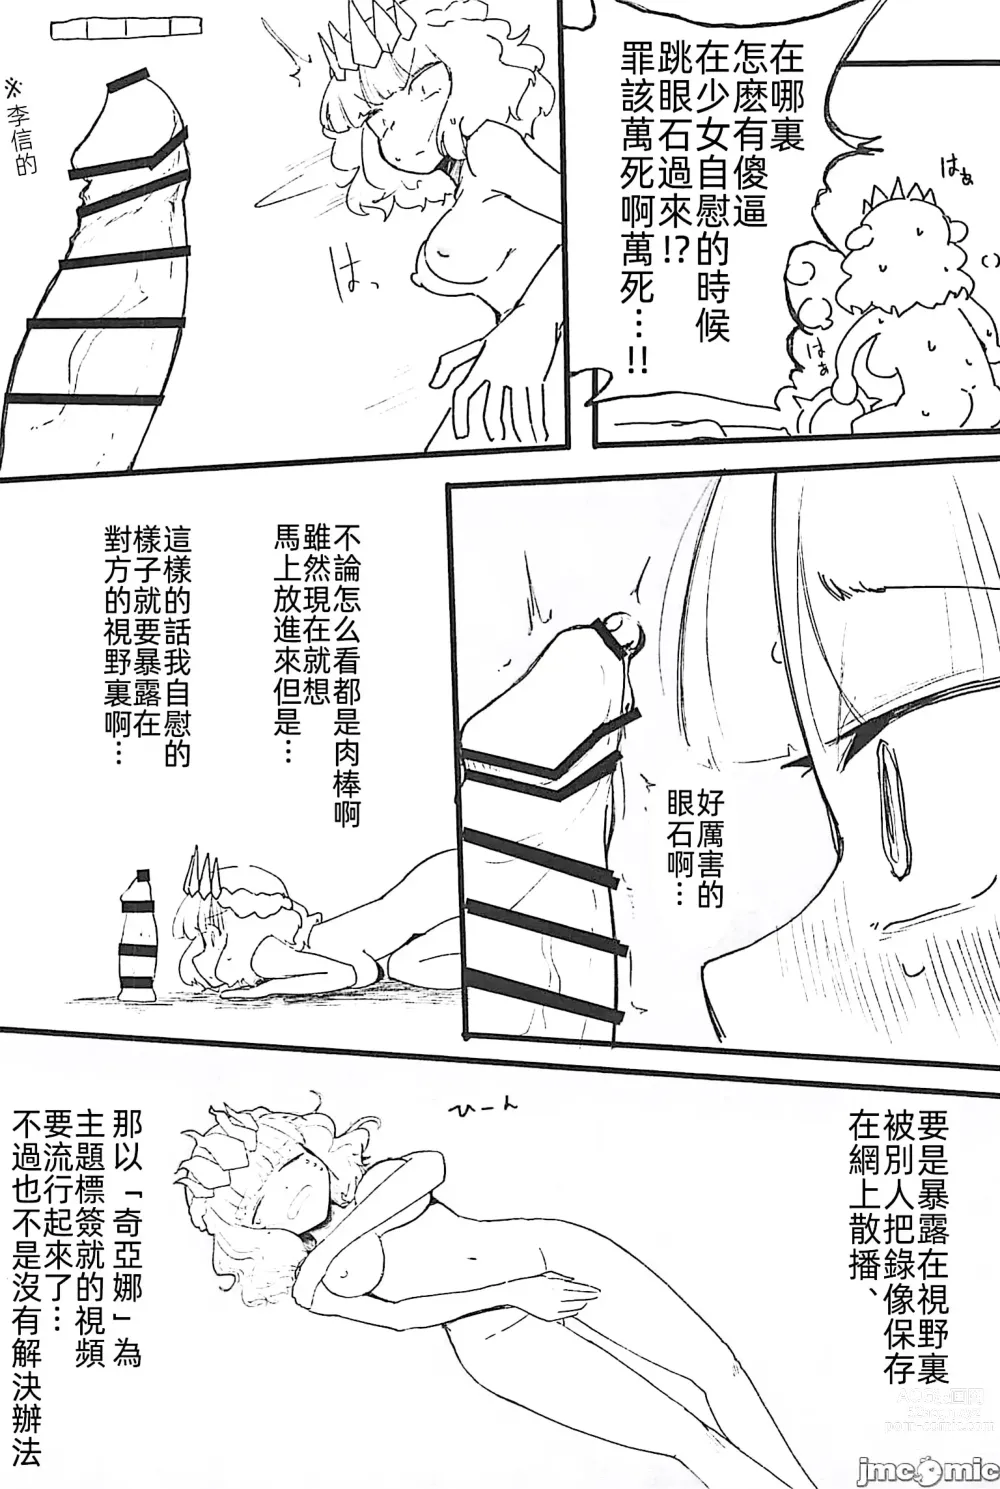 Page 11 of manga crosmcx12.13